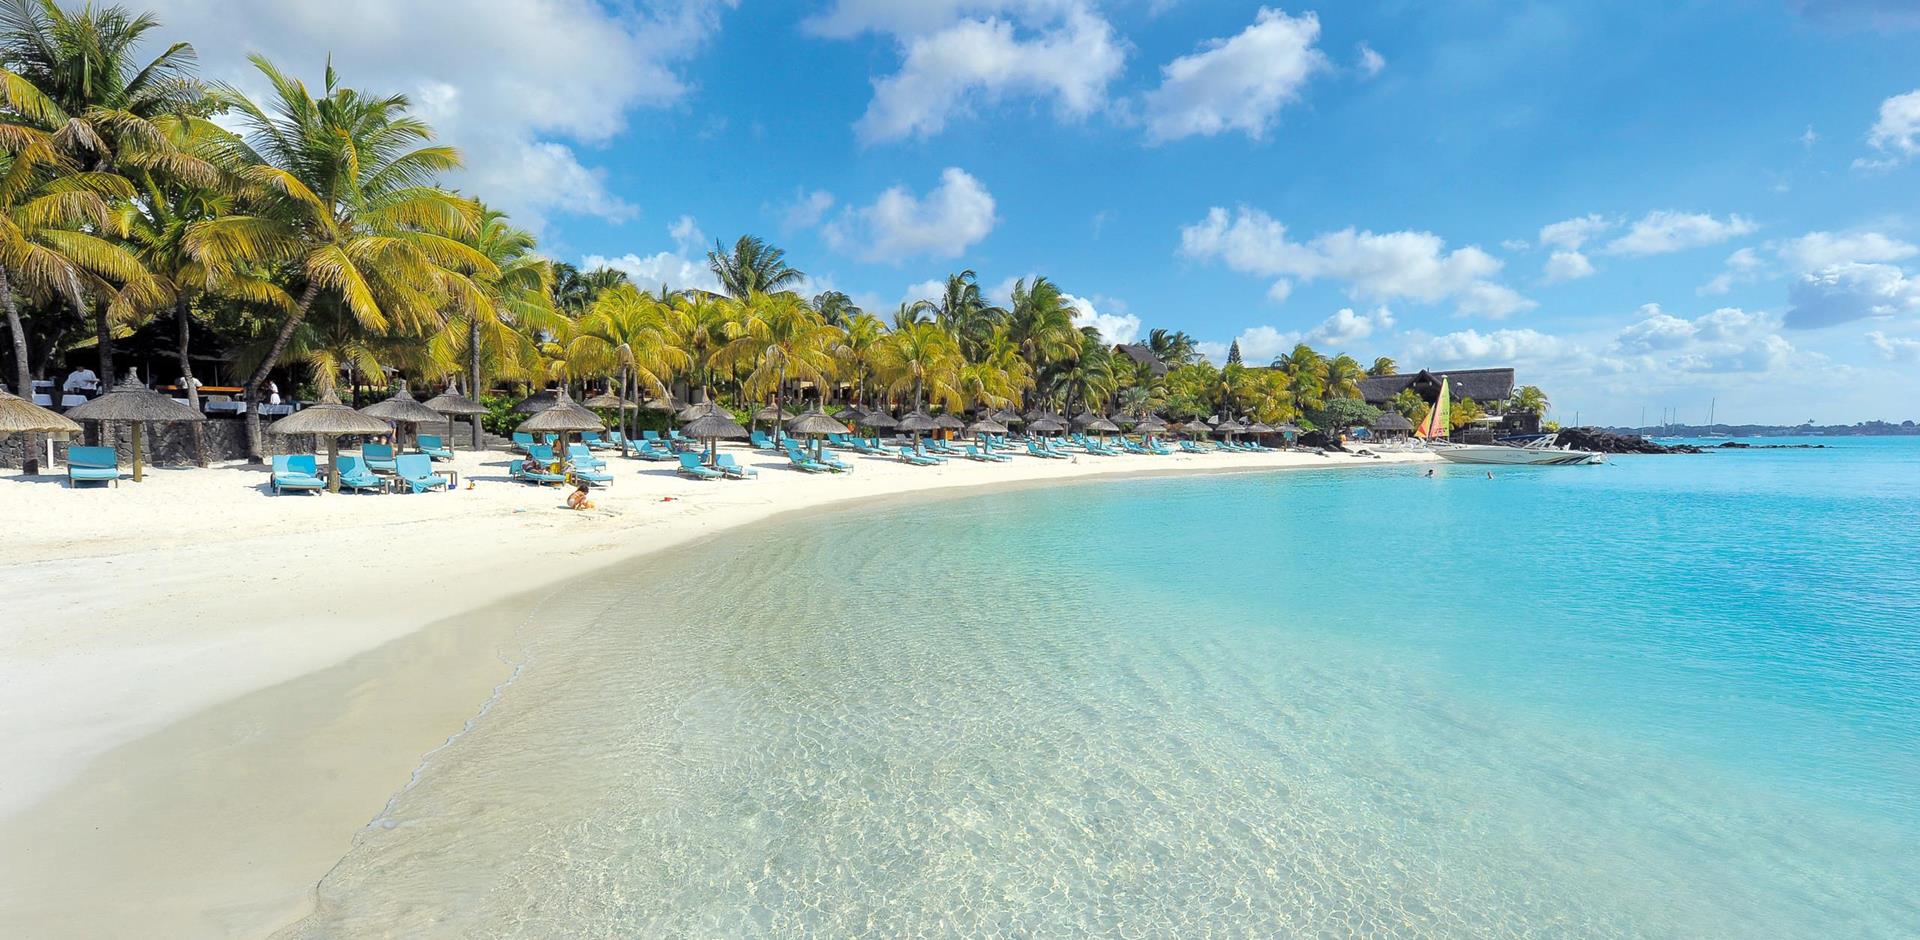 Royal Palm Beachcomber Luxury, Mauritius, A&K